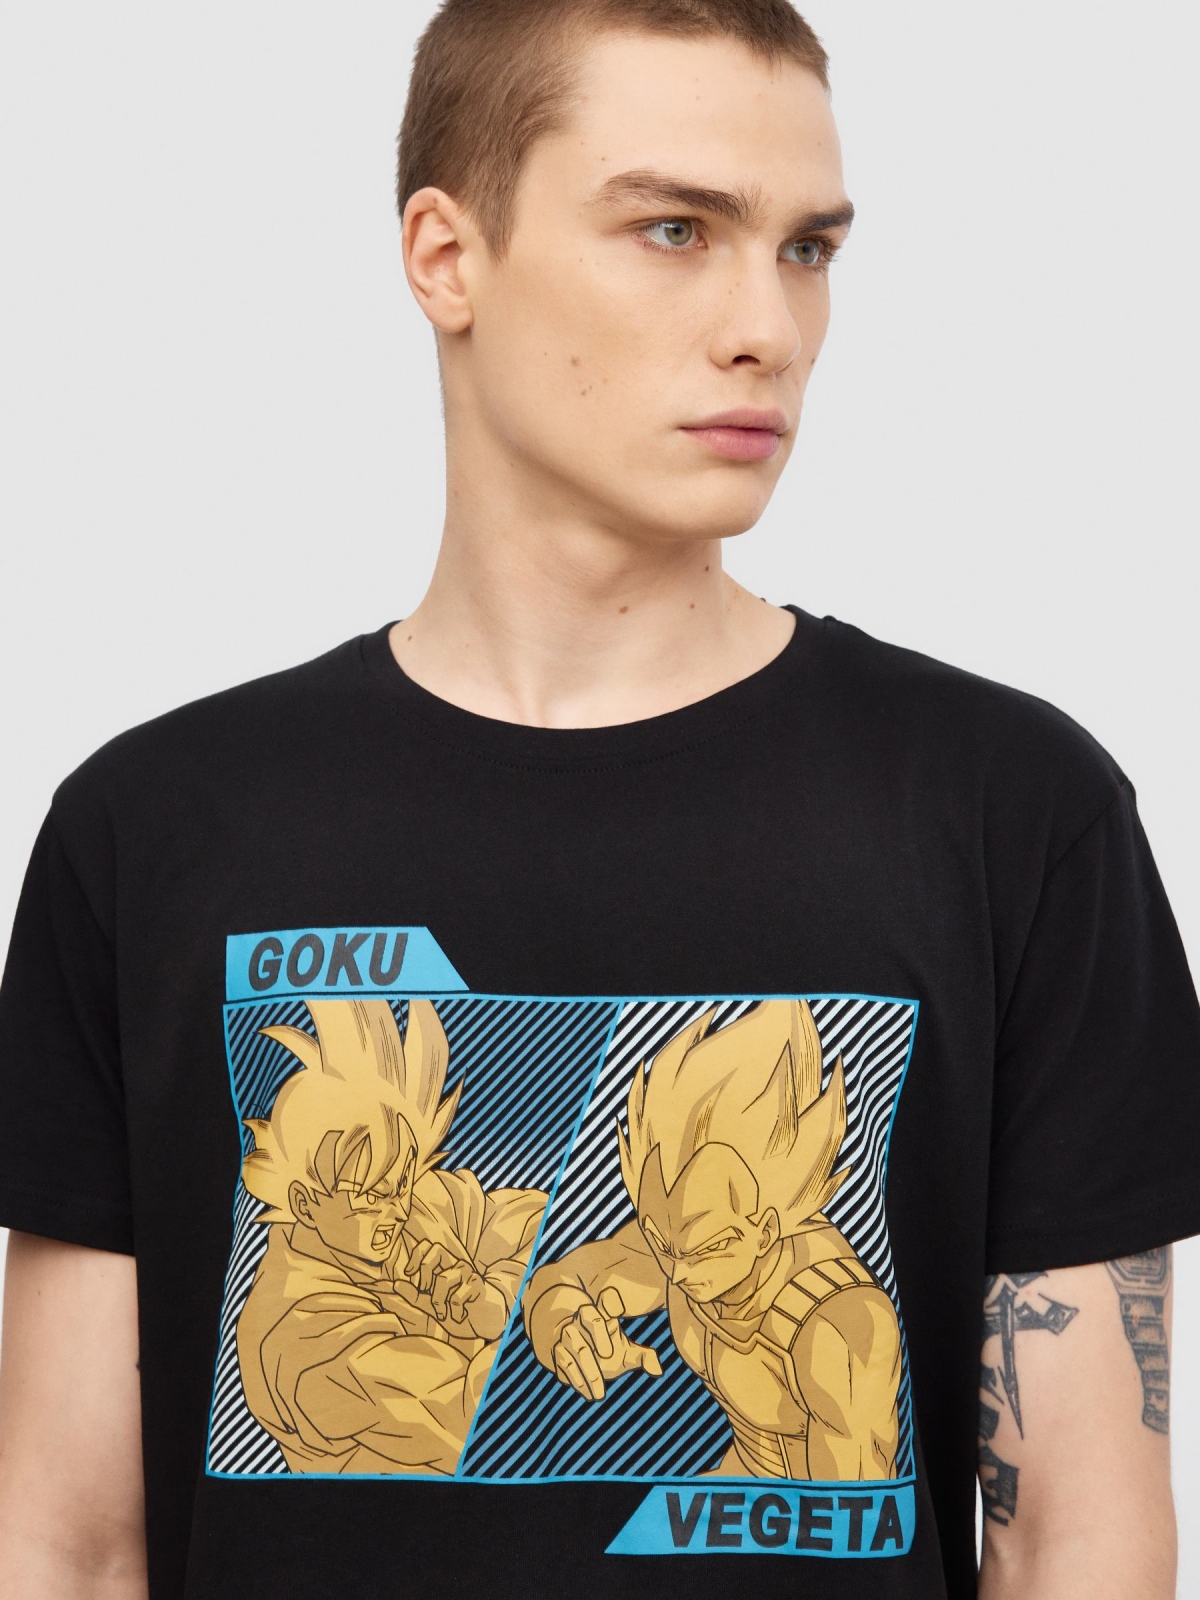 Goku vs Vegeta t-shirt black detail view